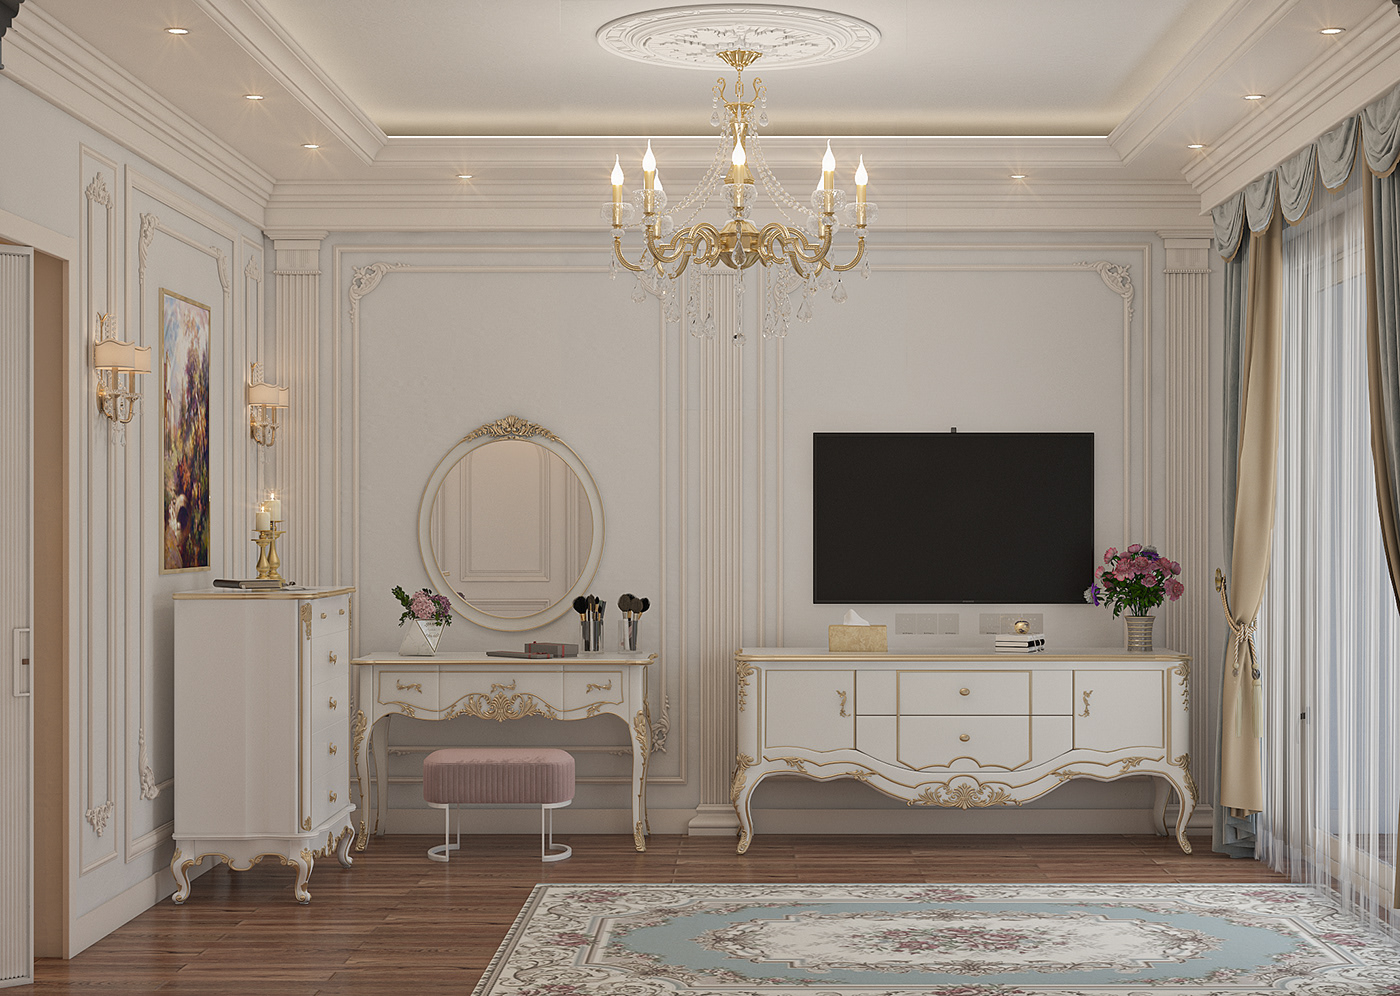 babyblue classic style design interior design  master bedroom pinkbedroom